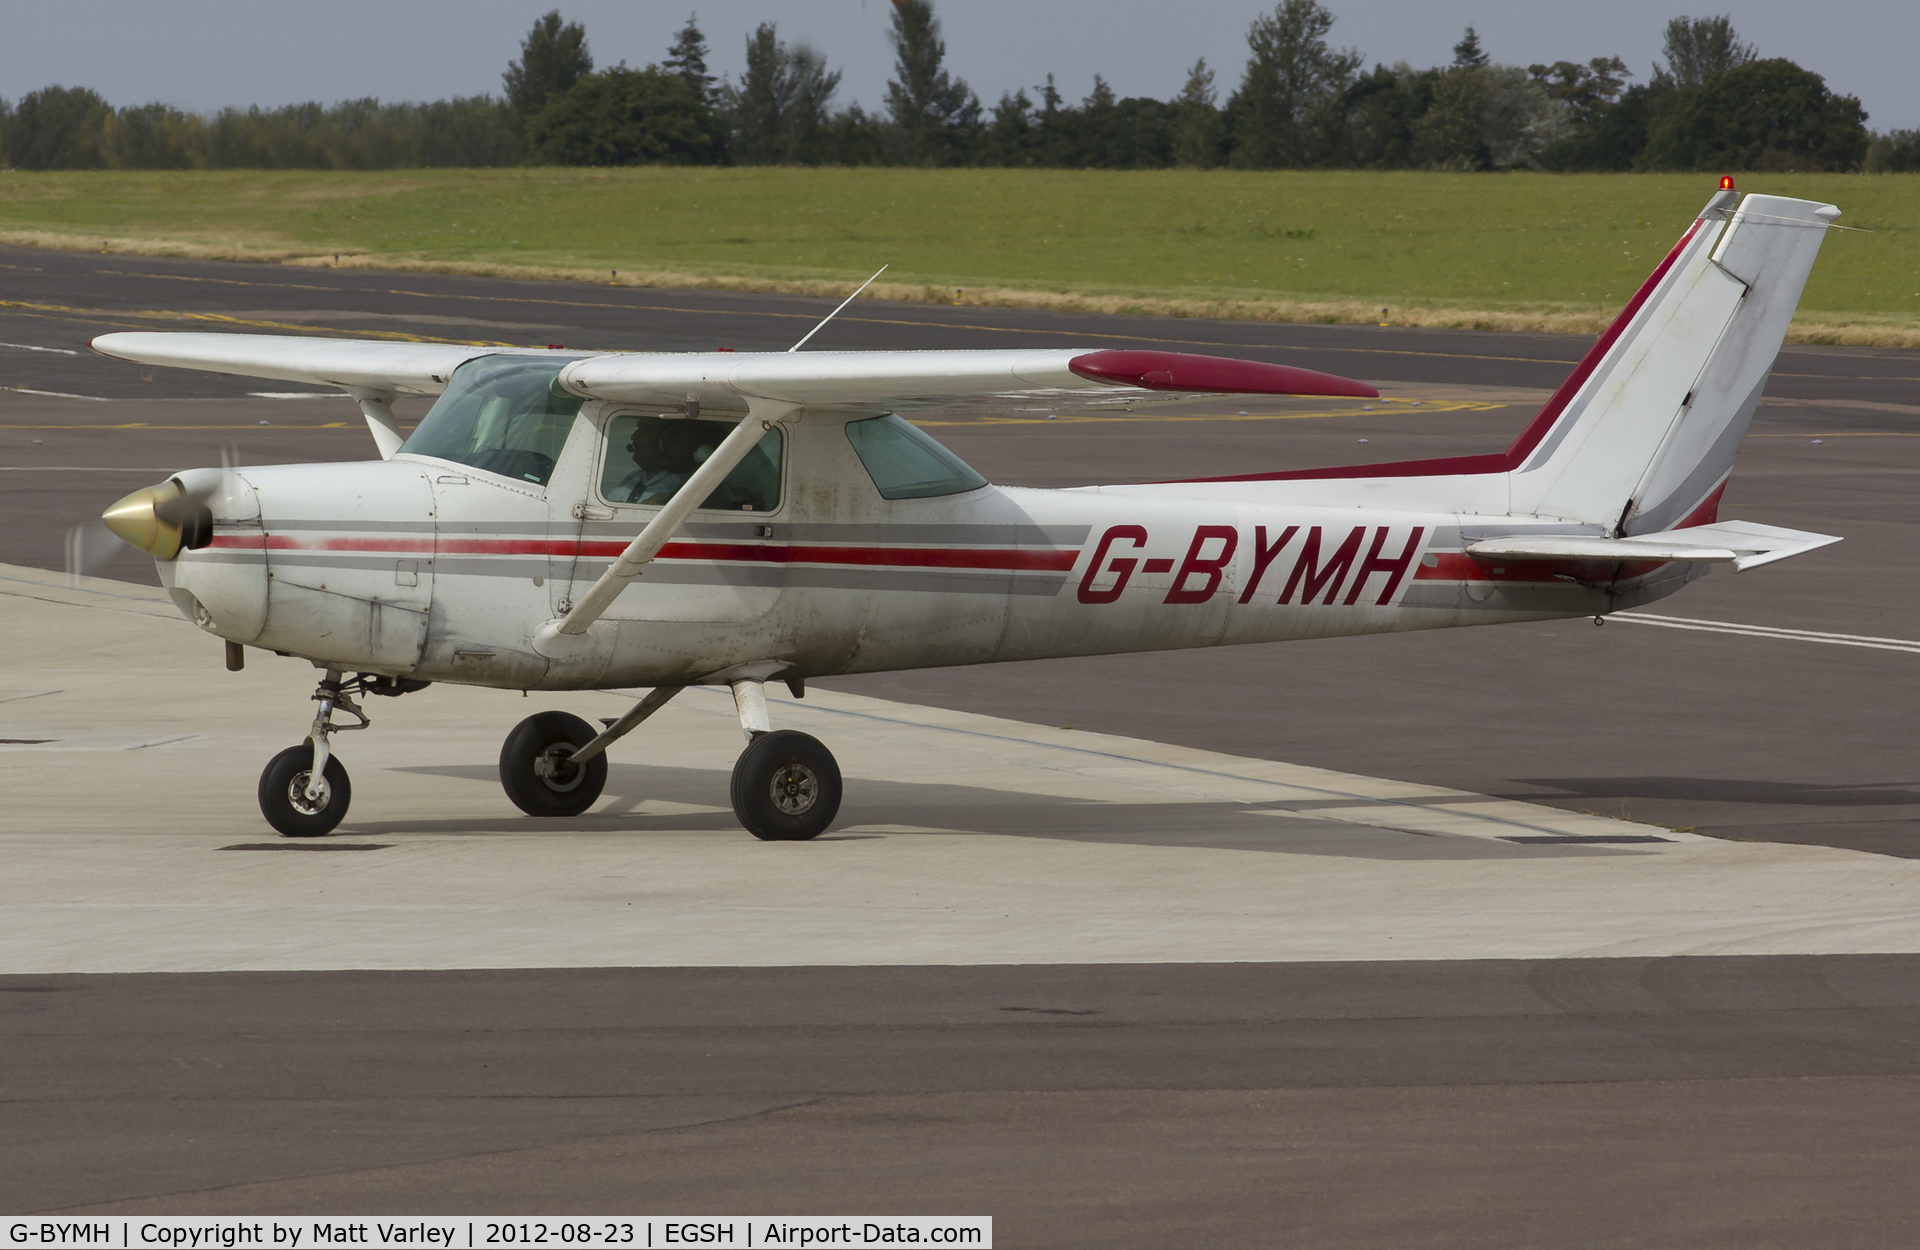 G-BYMH, 1981 Cessna 152 C/N 152-84980, Arriving at SaxonAir.